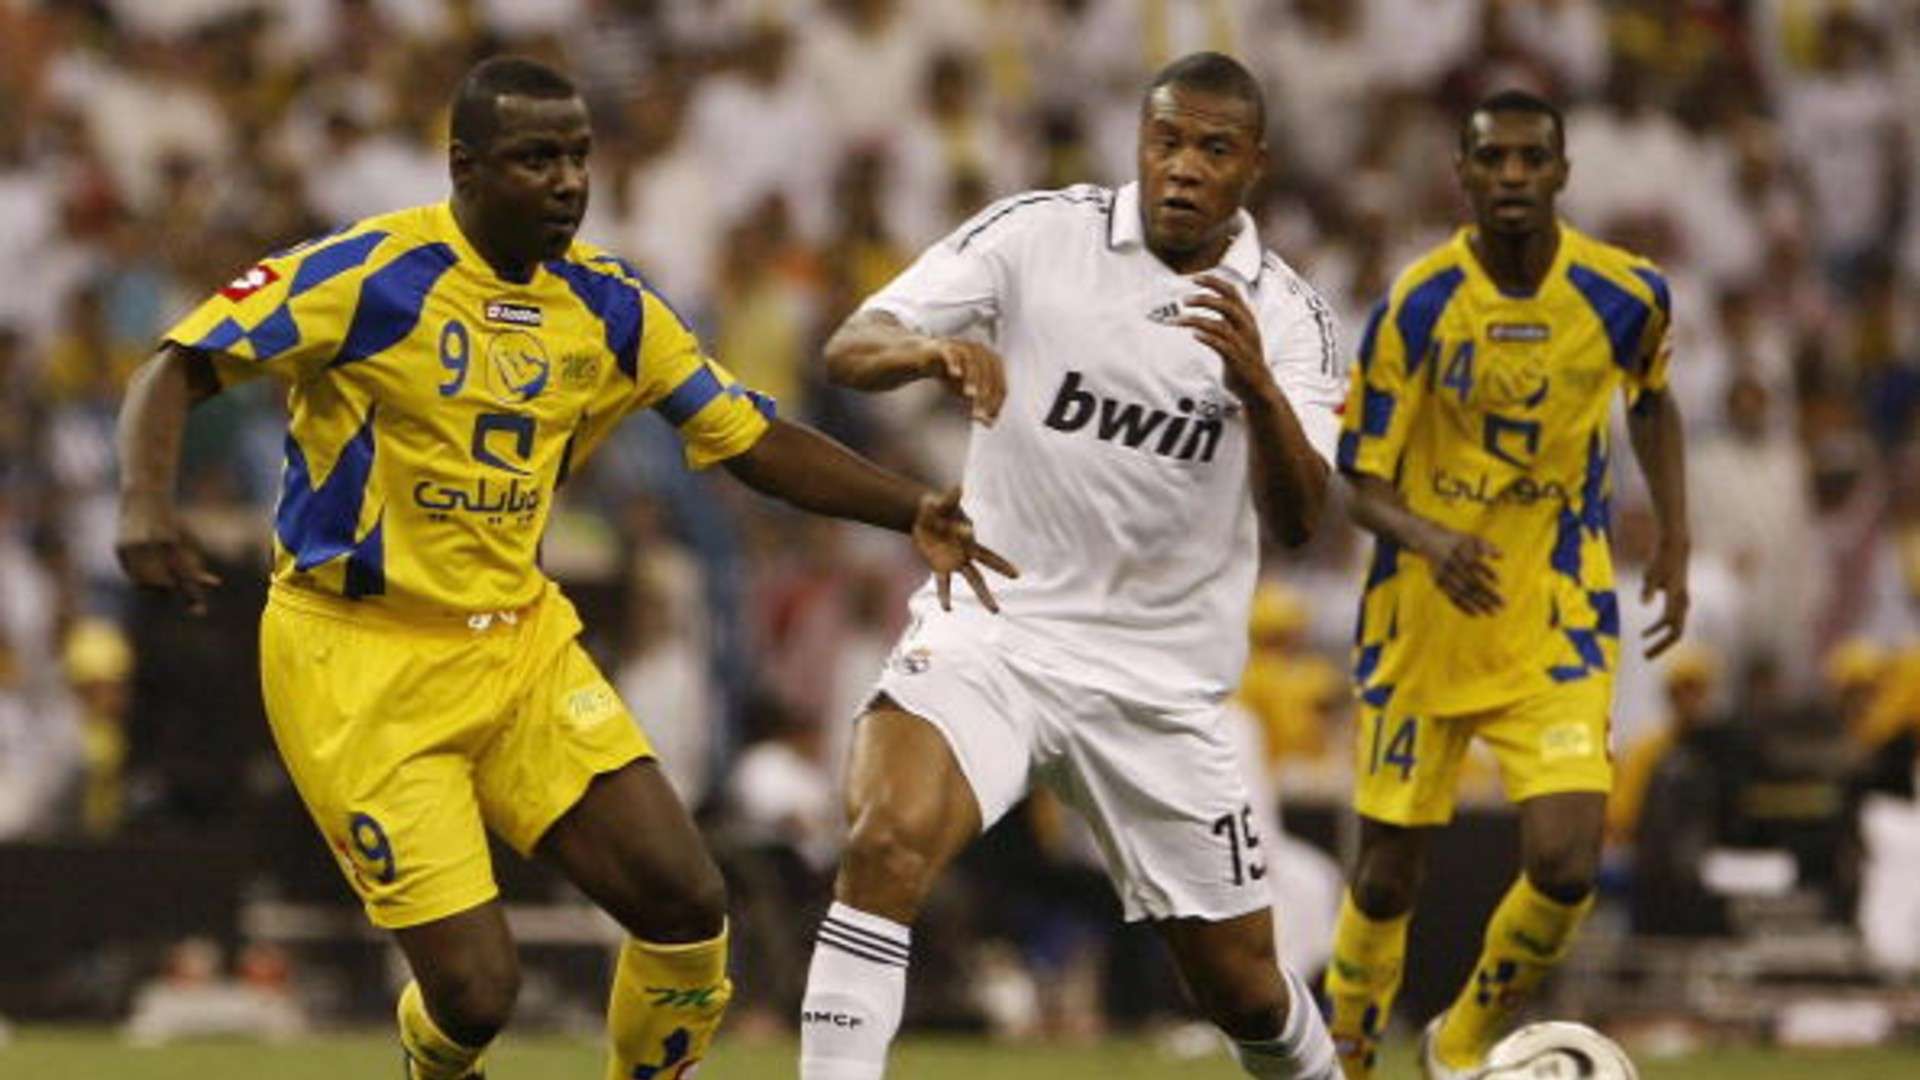 Majed Abdullah - nassr 2008 - Real Madrid -  Baptista